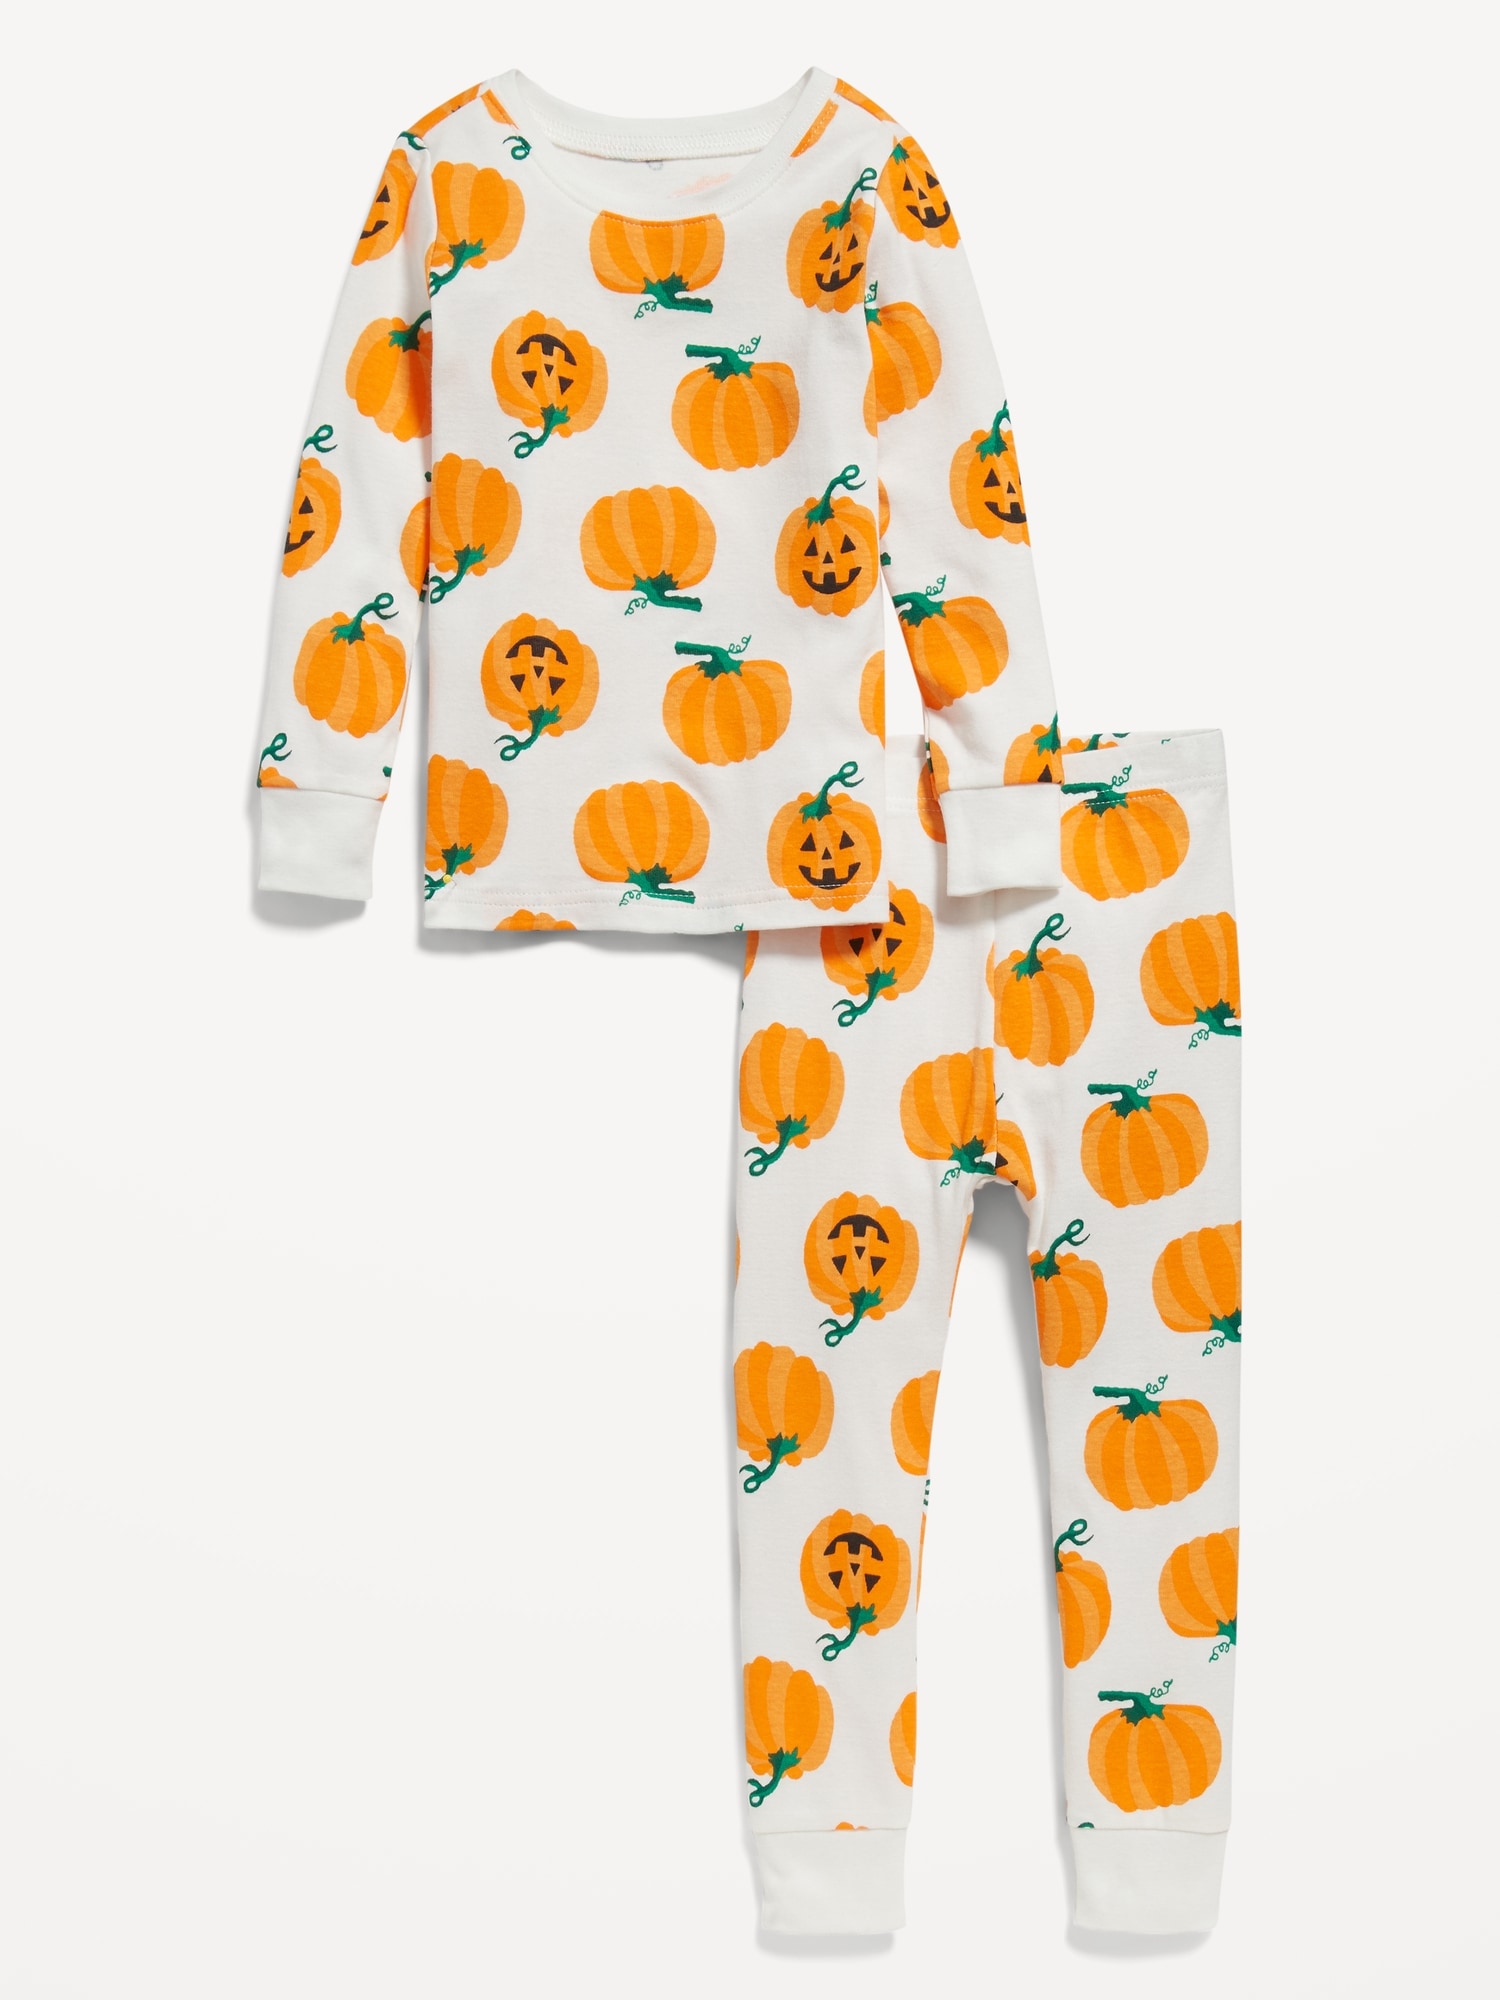 Matching Unisex Snug-Fit Pajama Set for Toddler & Baby